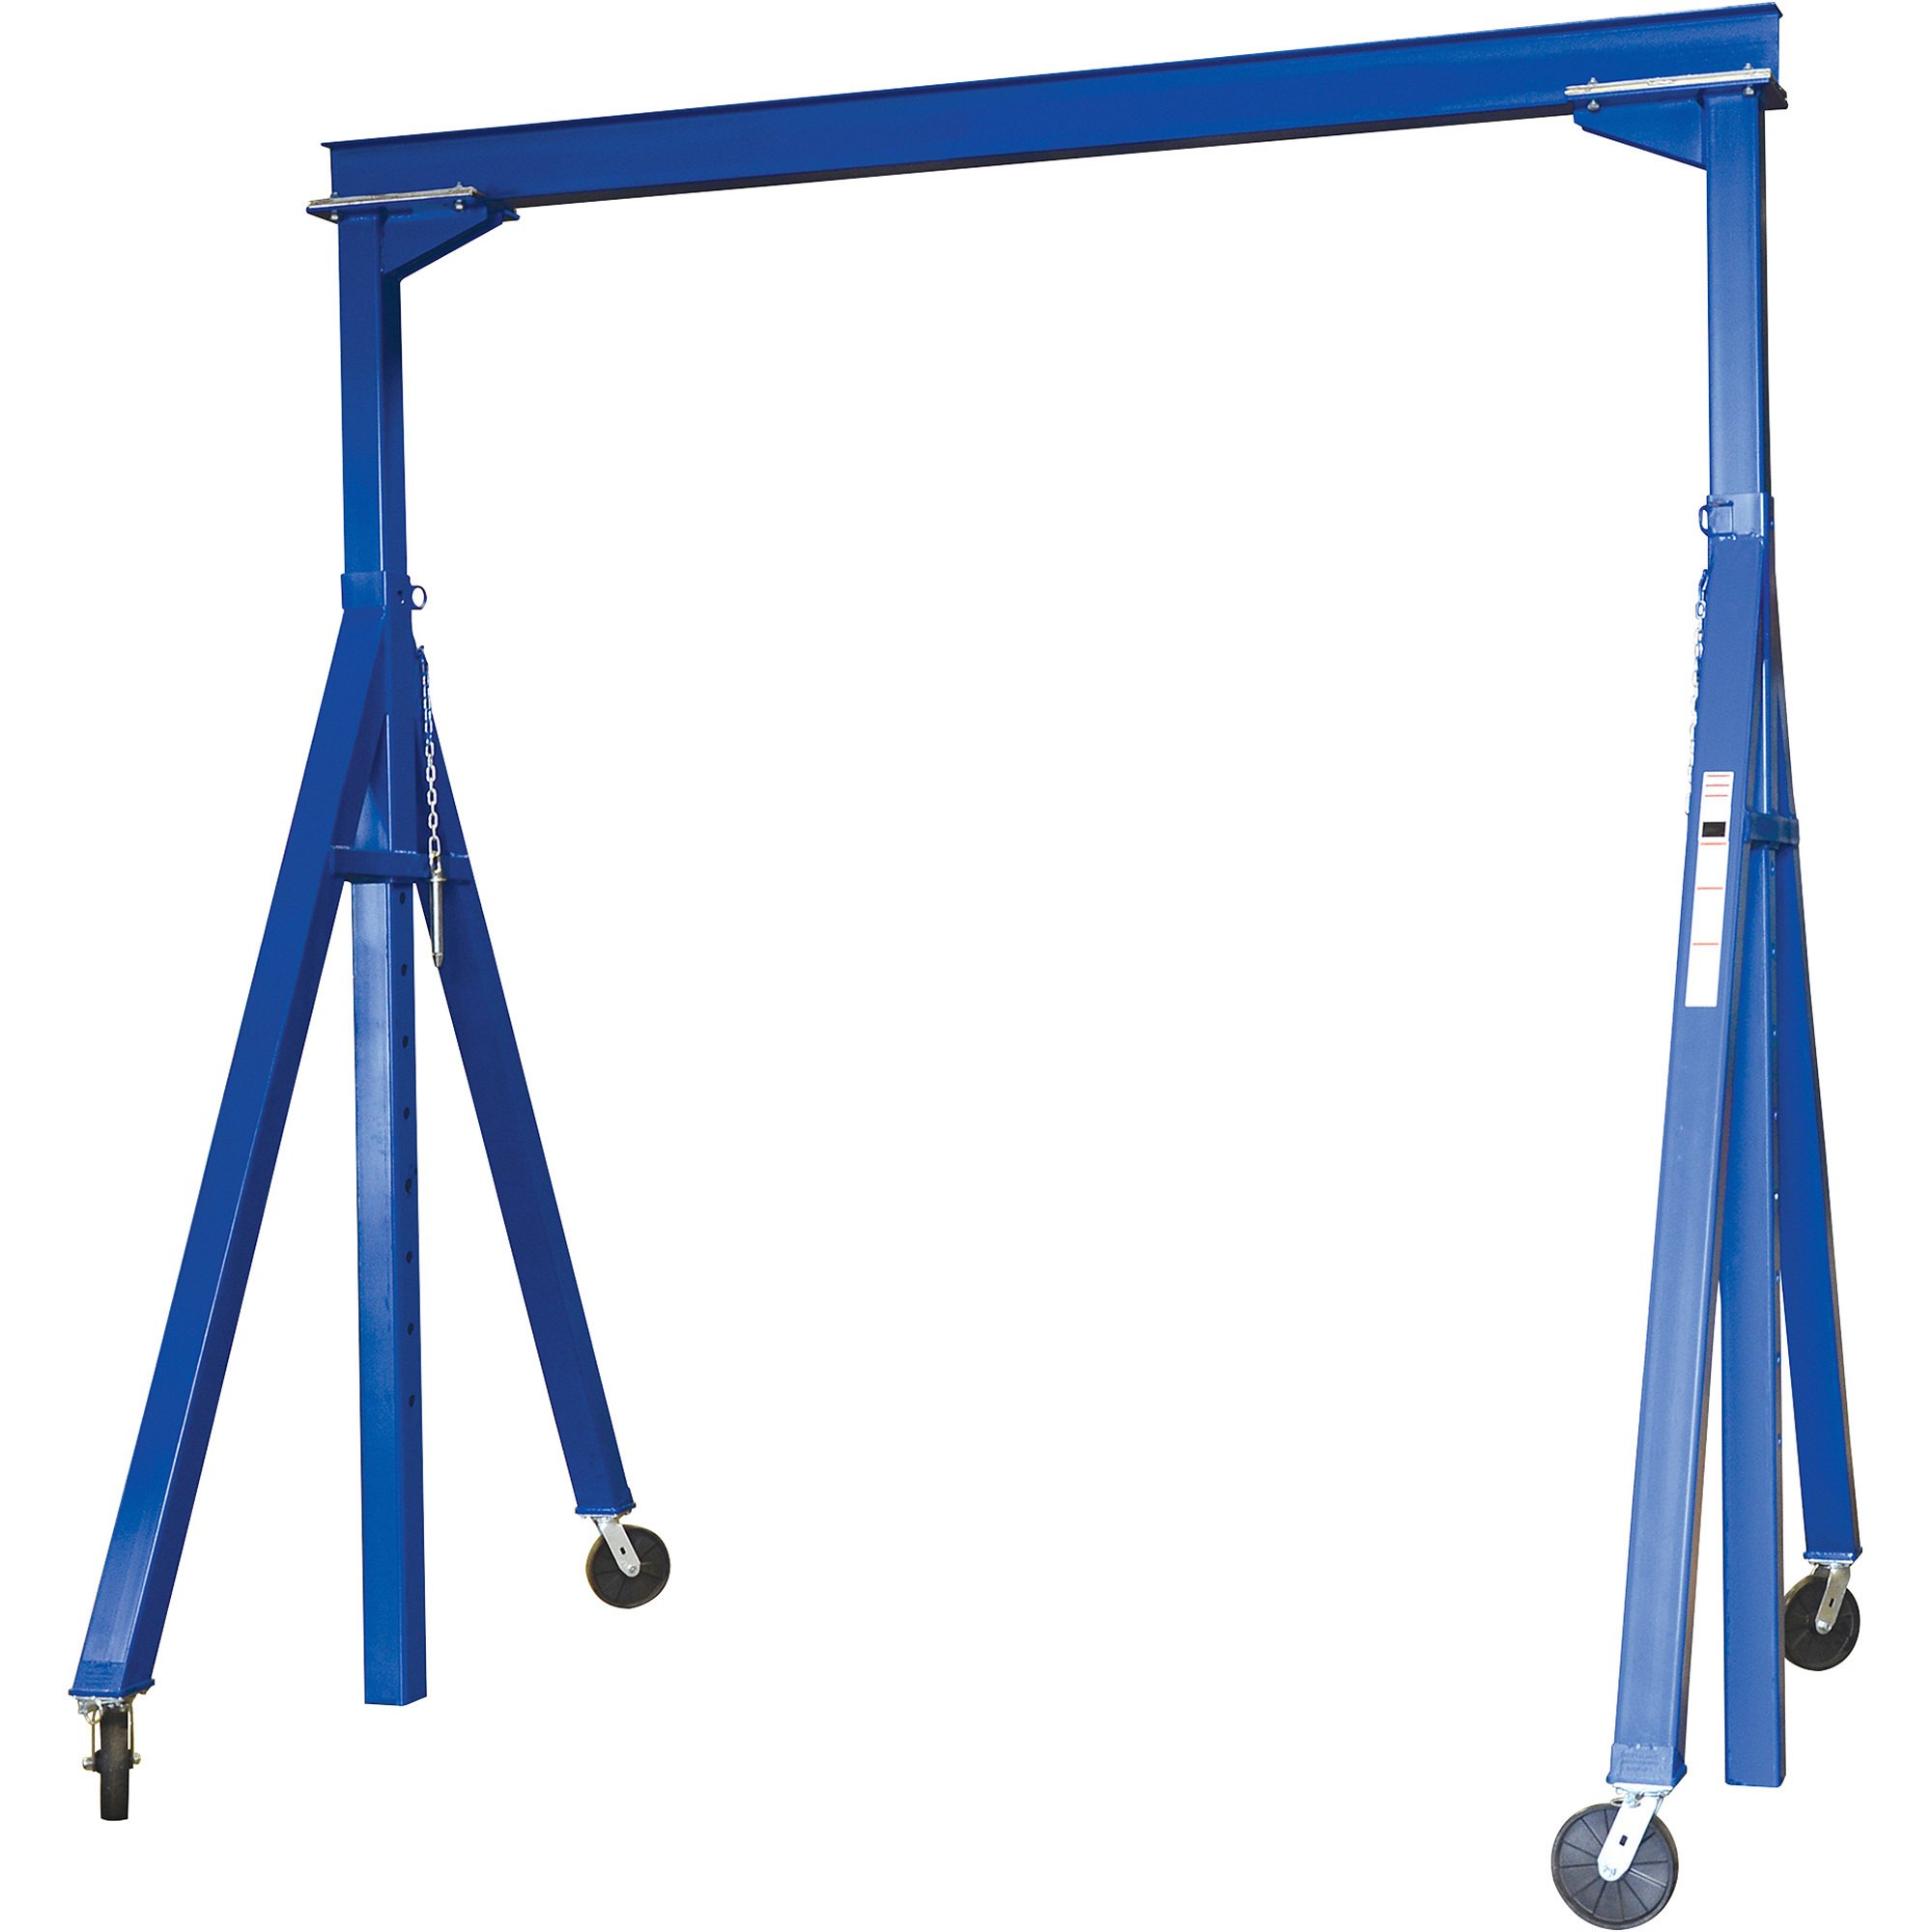 Vestil Steel Adjustable Height Gantry Crane with Glass Filled Nylon Casters, 2000-Lb. Capacity, Blue, Model AHS-2-15-9